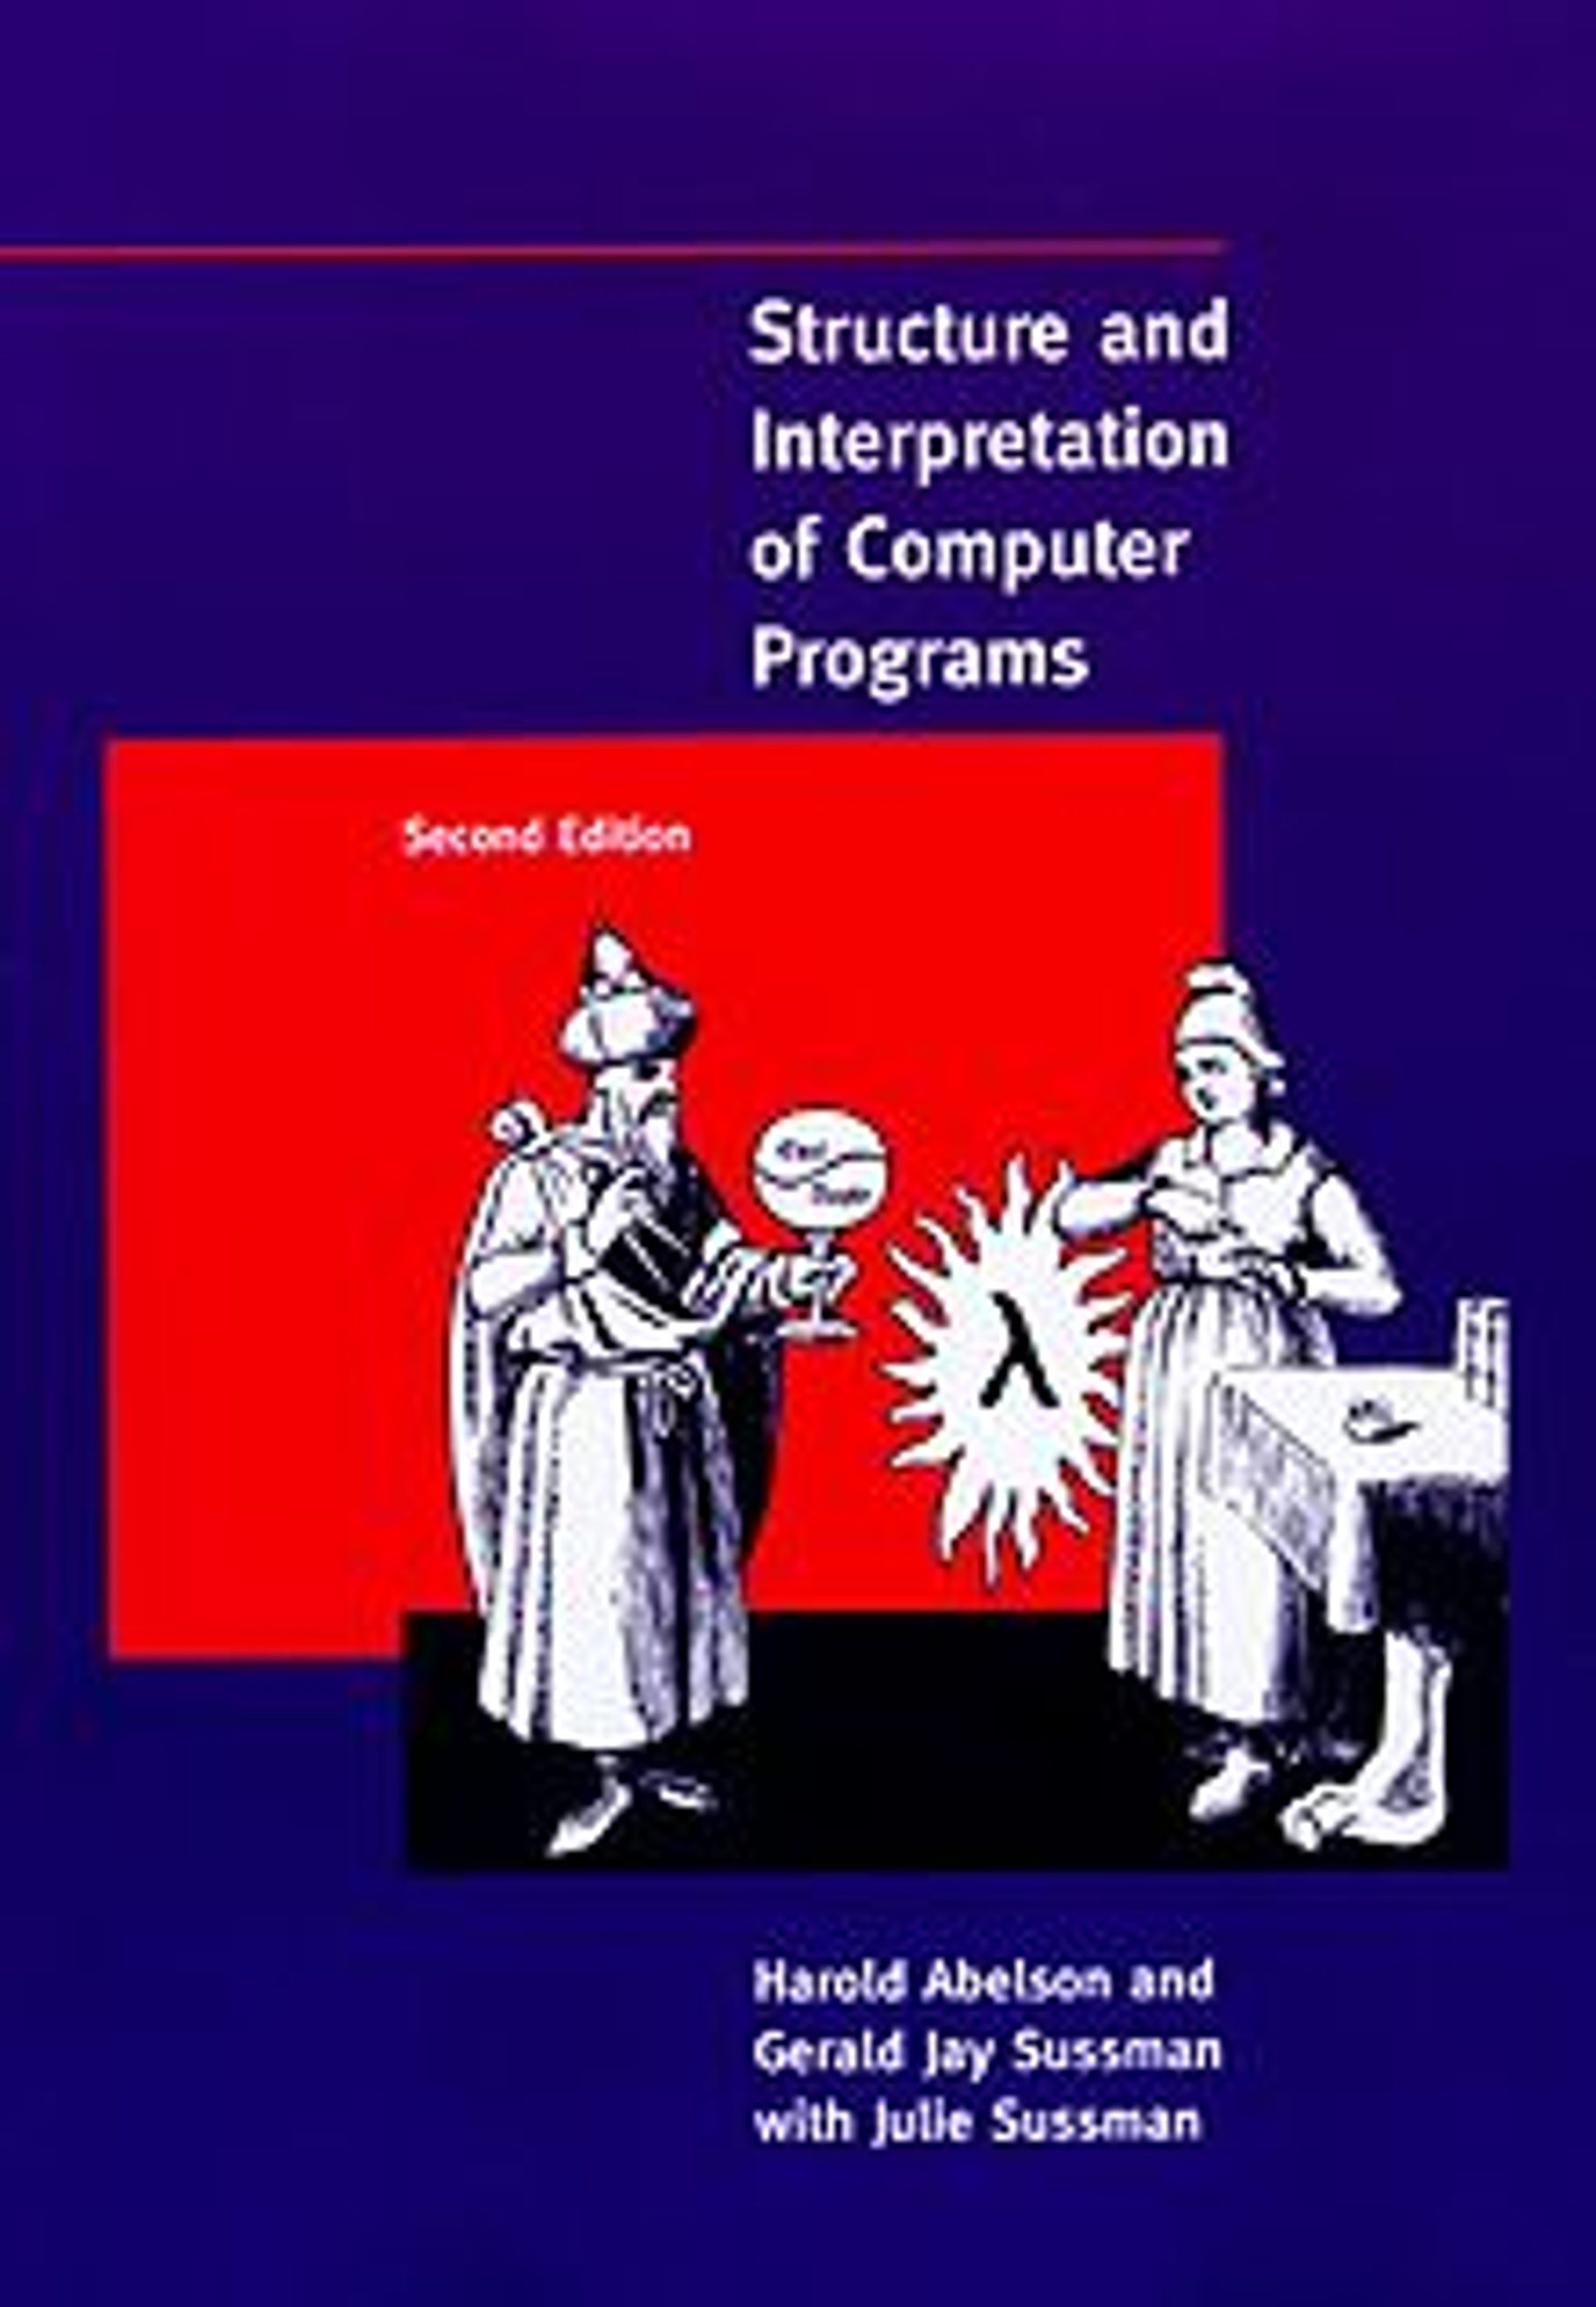 Structure and Interpretation of Computer Programs - Wikipedia